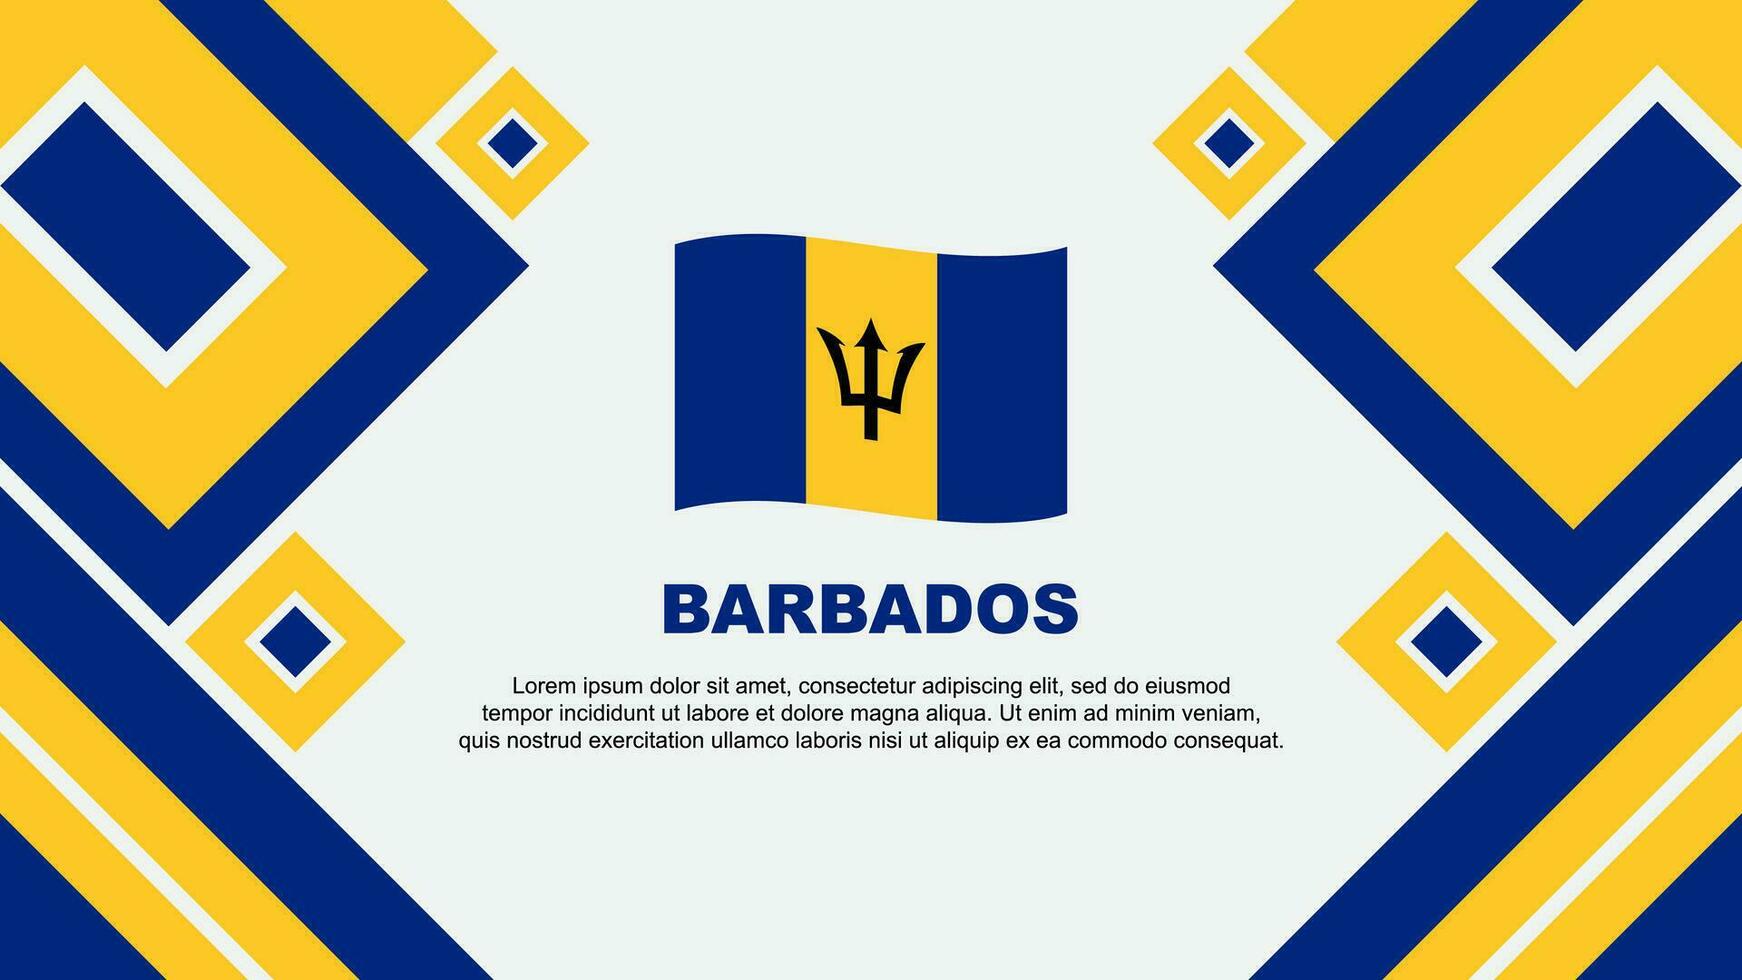 Barbados Flag Abstract Background Design Template. Barbados Independence Day Banner Wallpaper Vector Illustration. Barbados Cartoon